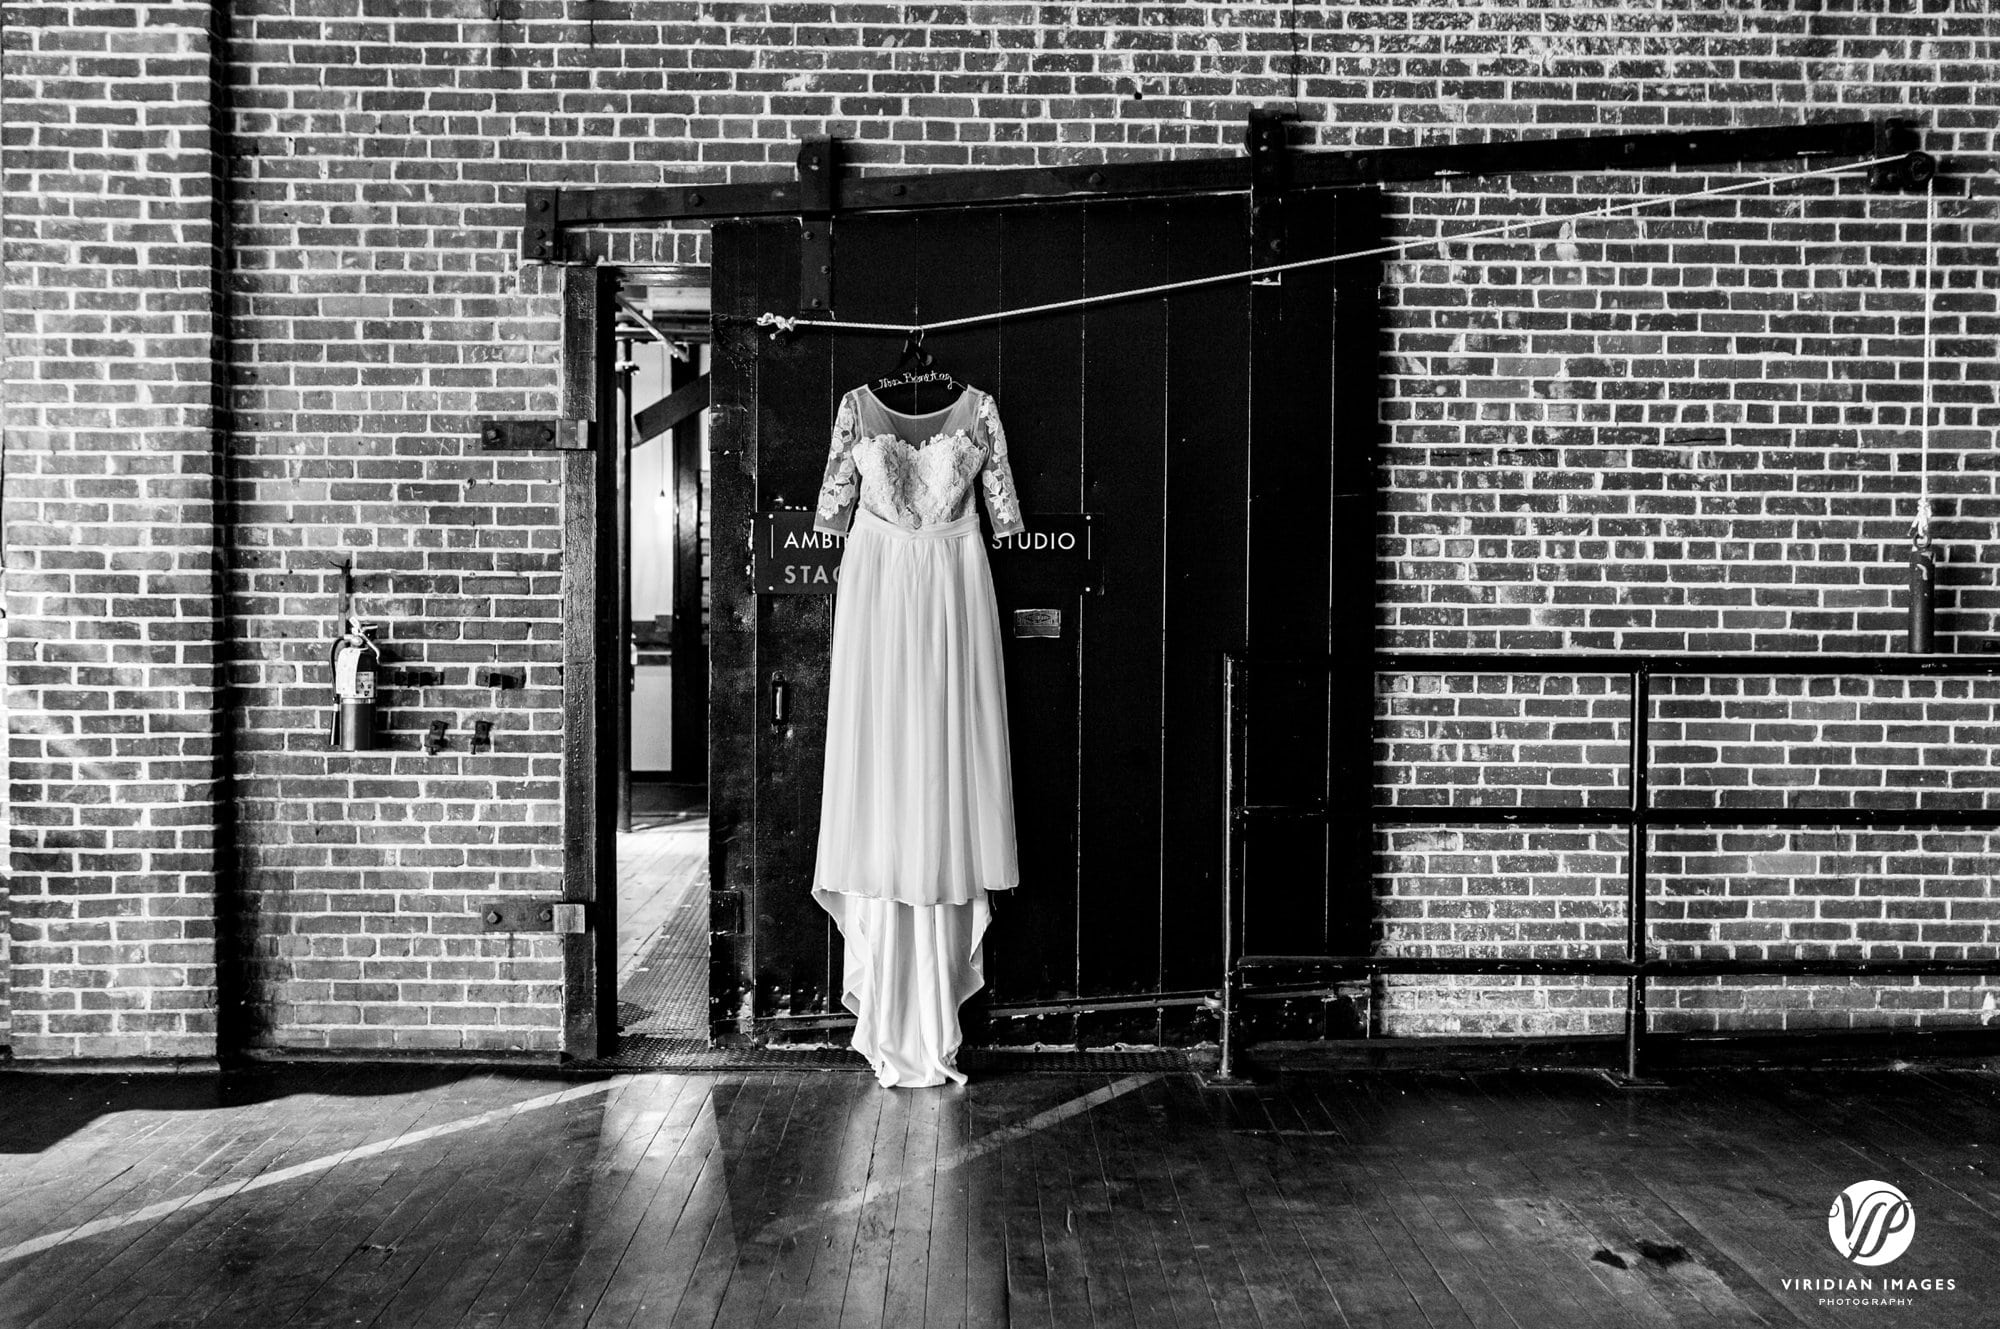 Ambient+Studio wedding dress